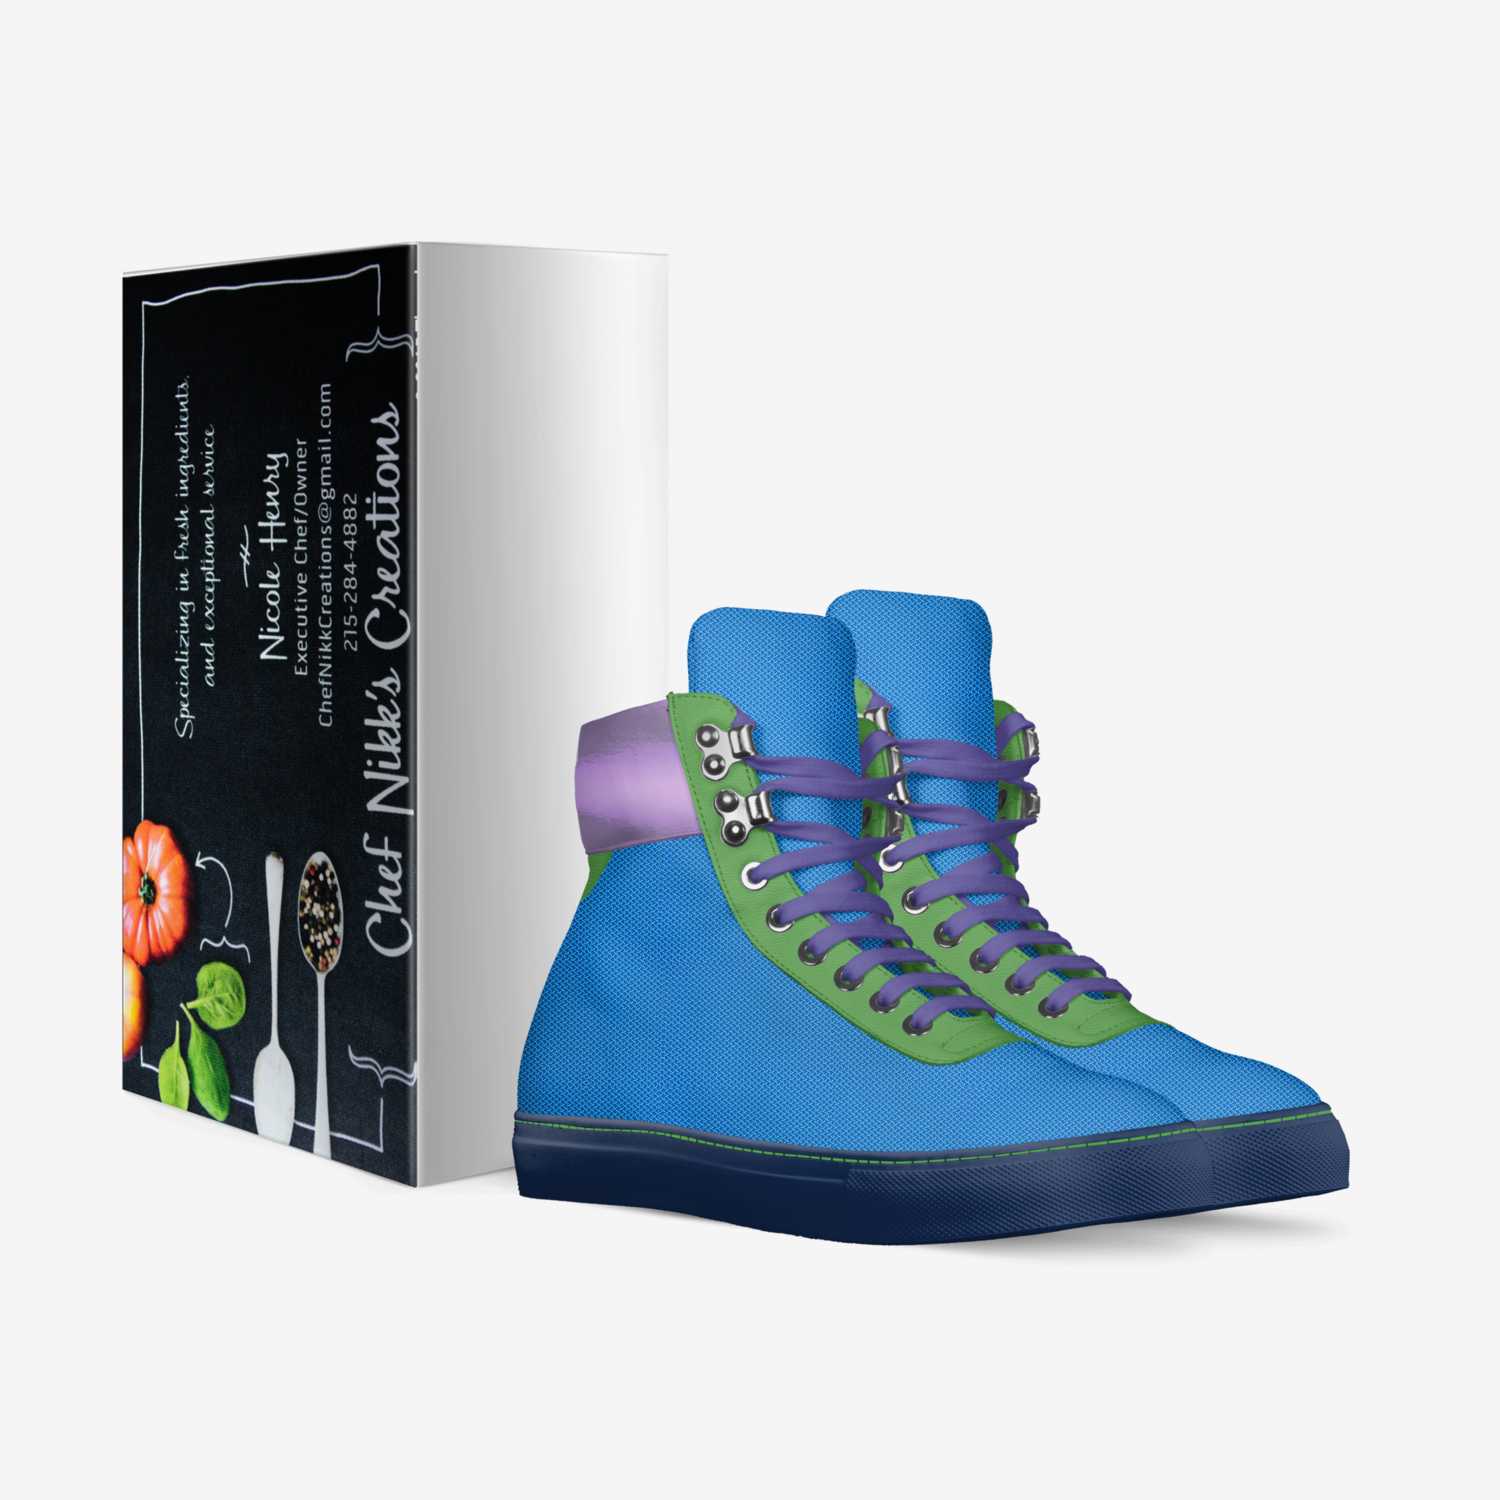 Aicila custom made in Italy shoes by Theodora Howard | Box view